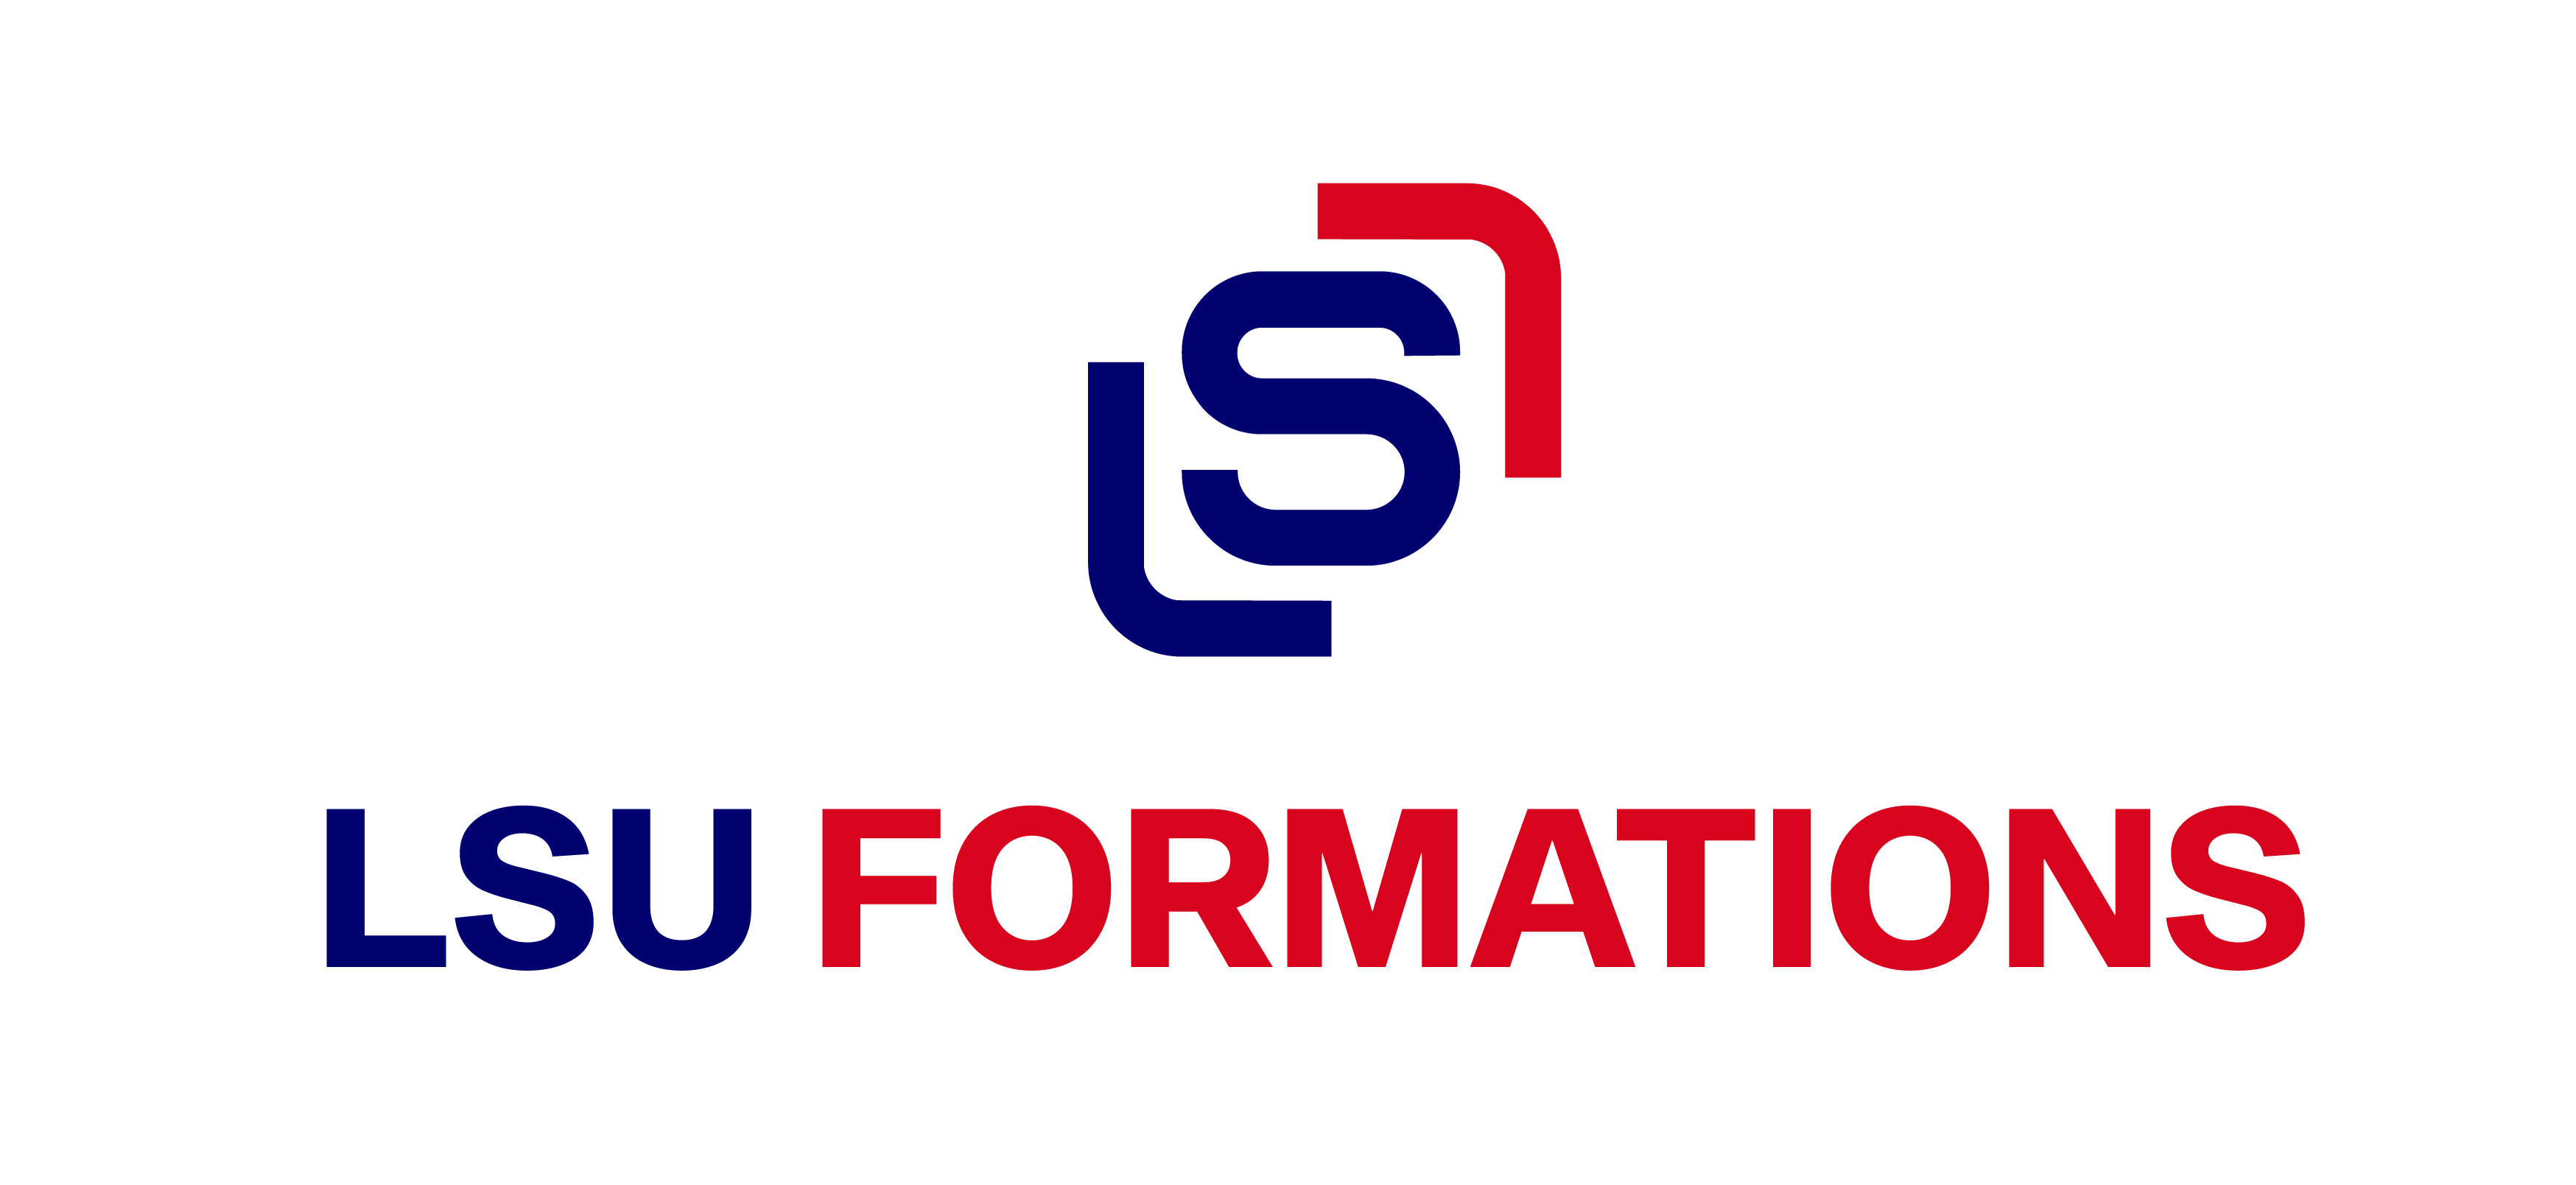 LSU Formations